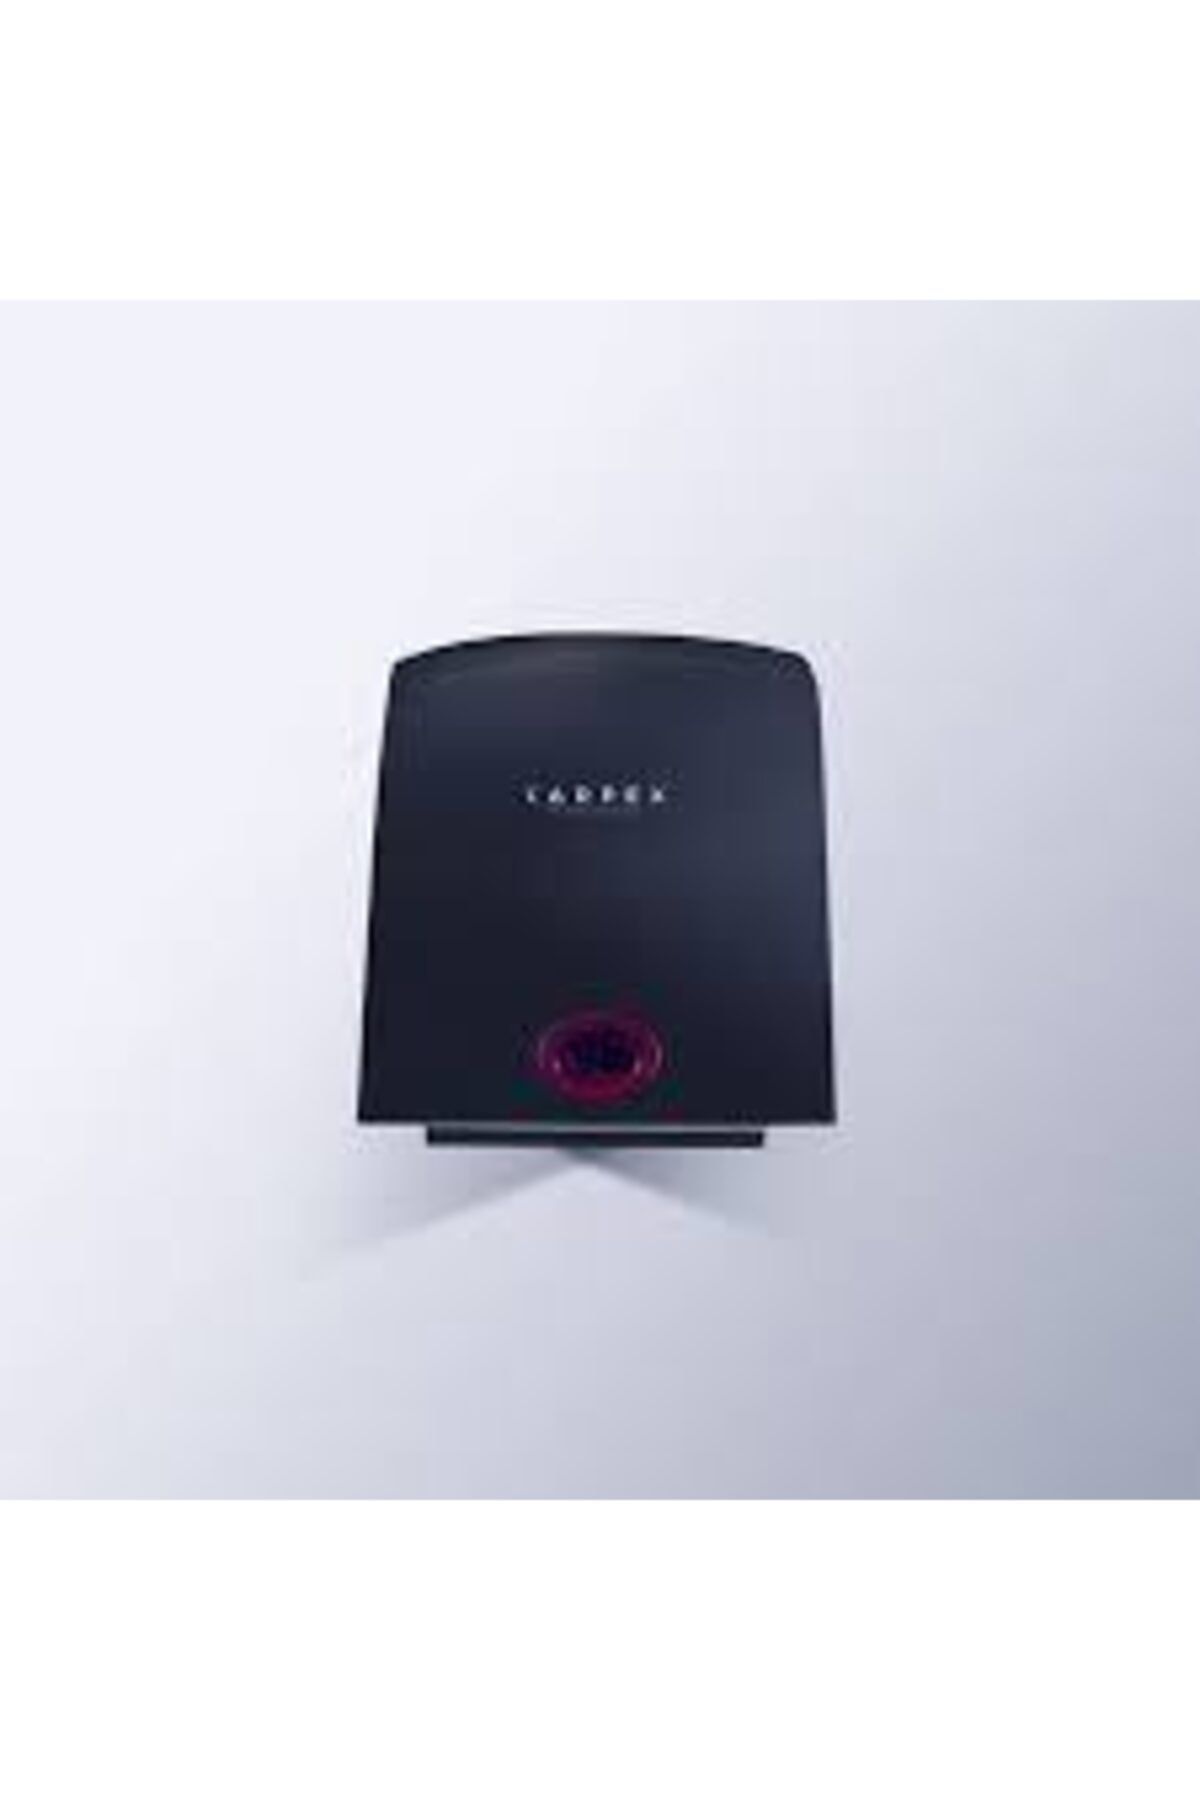 Carpex Sensörlü Kağıt Havlu Makinası Siyah